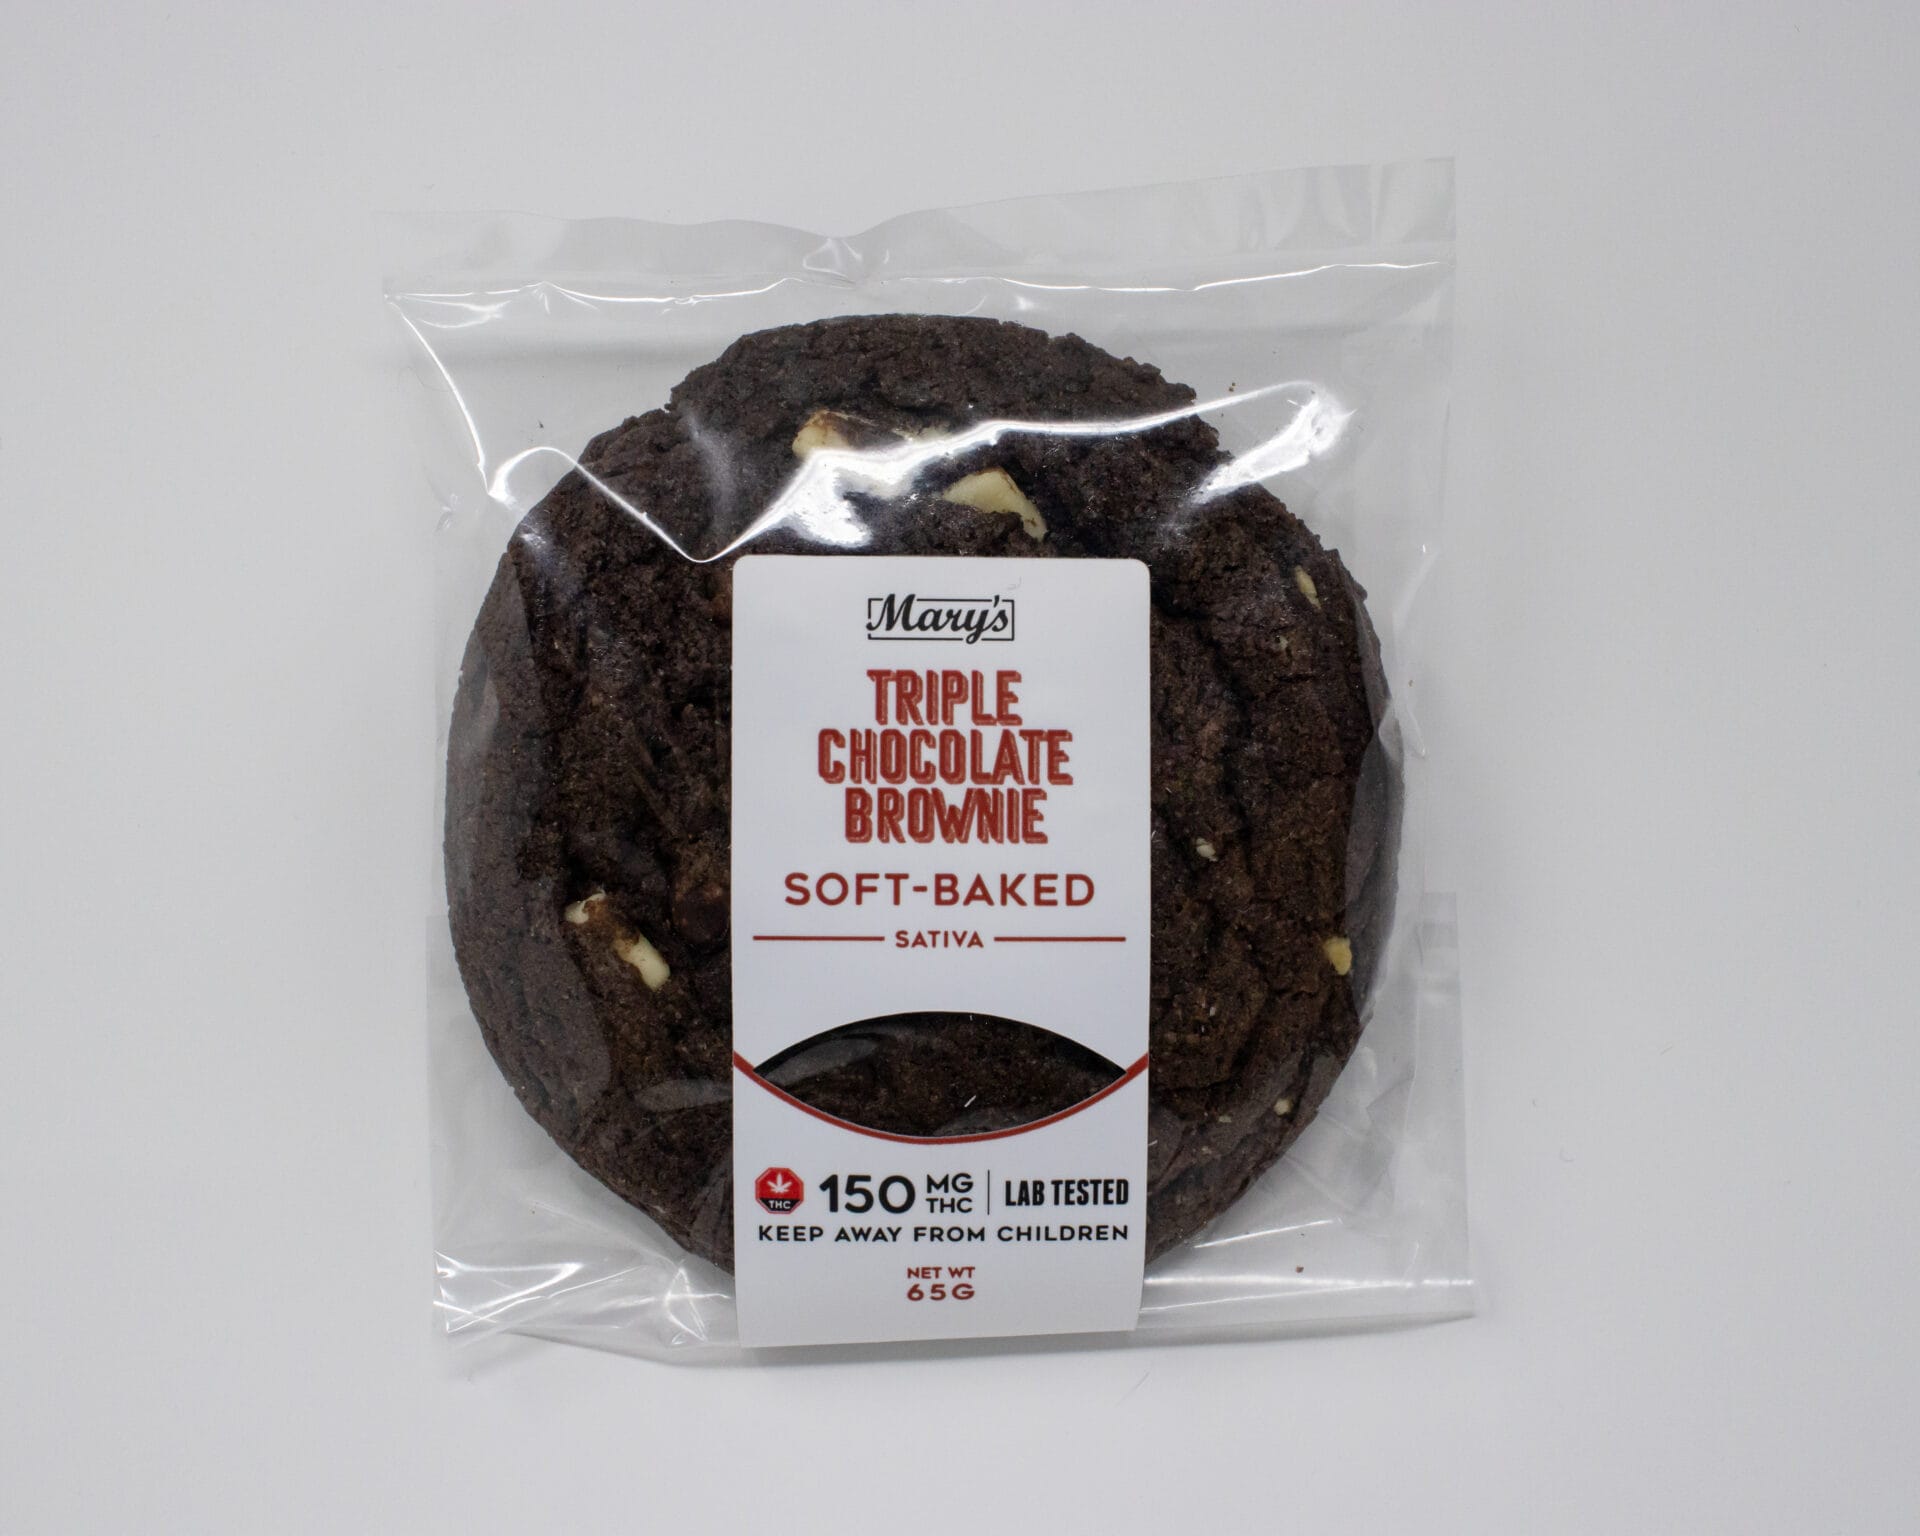 Mary's Triple Chocolate Brownie - Soft-Baked - Sativa